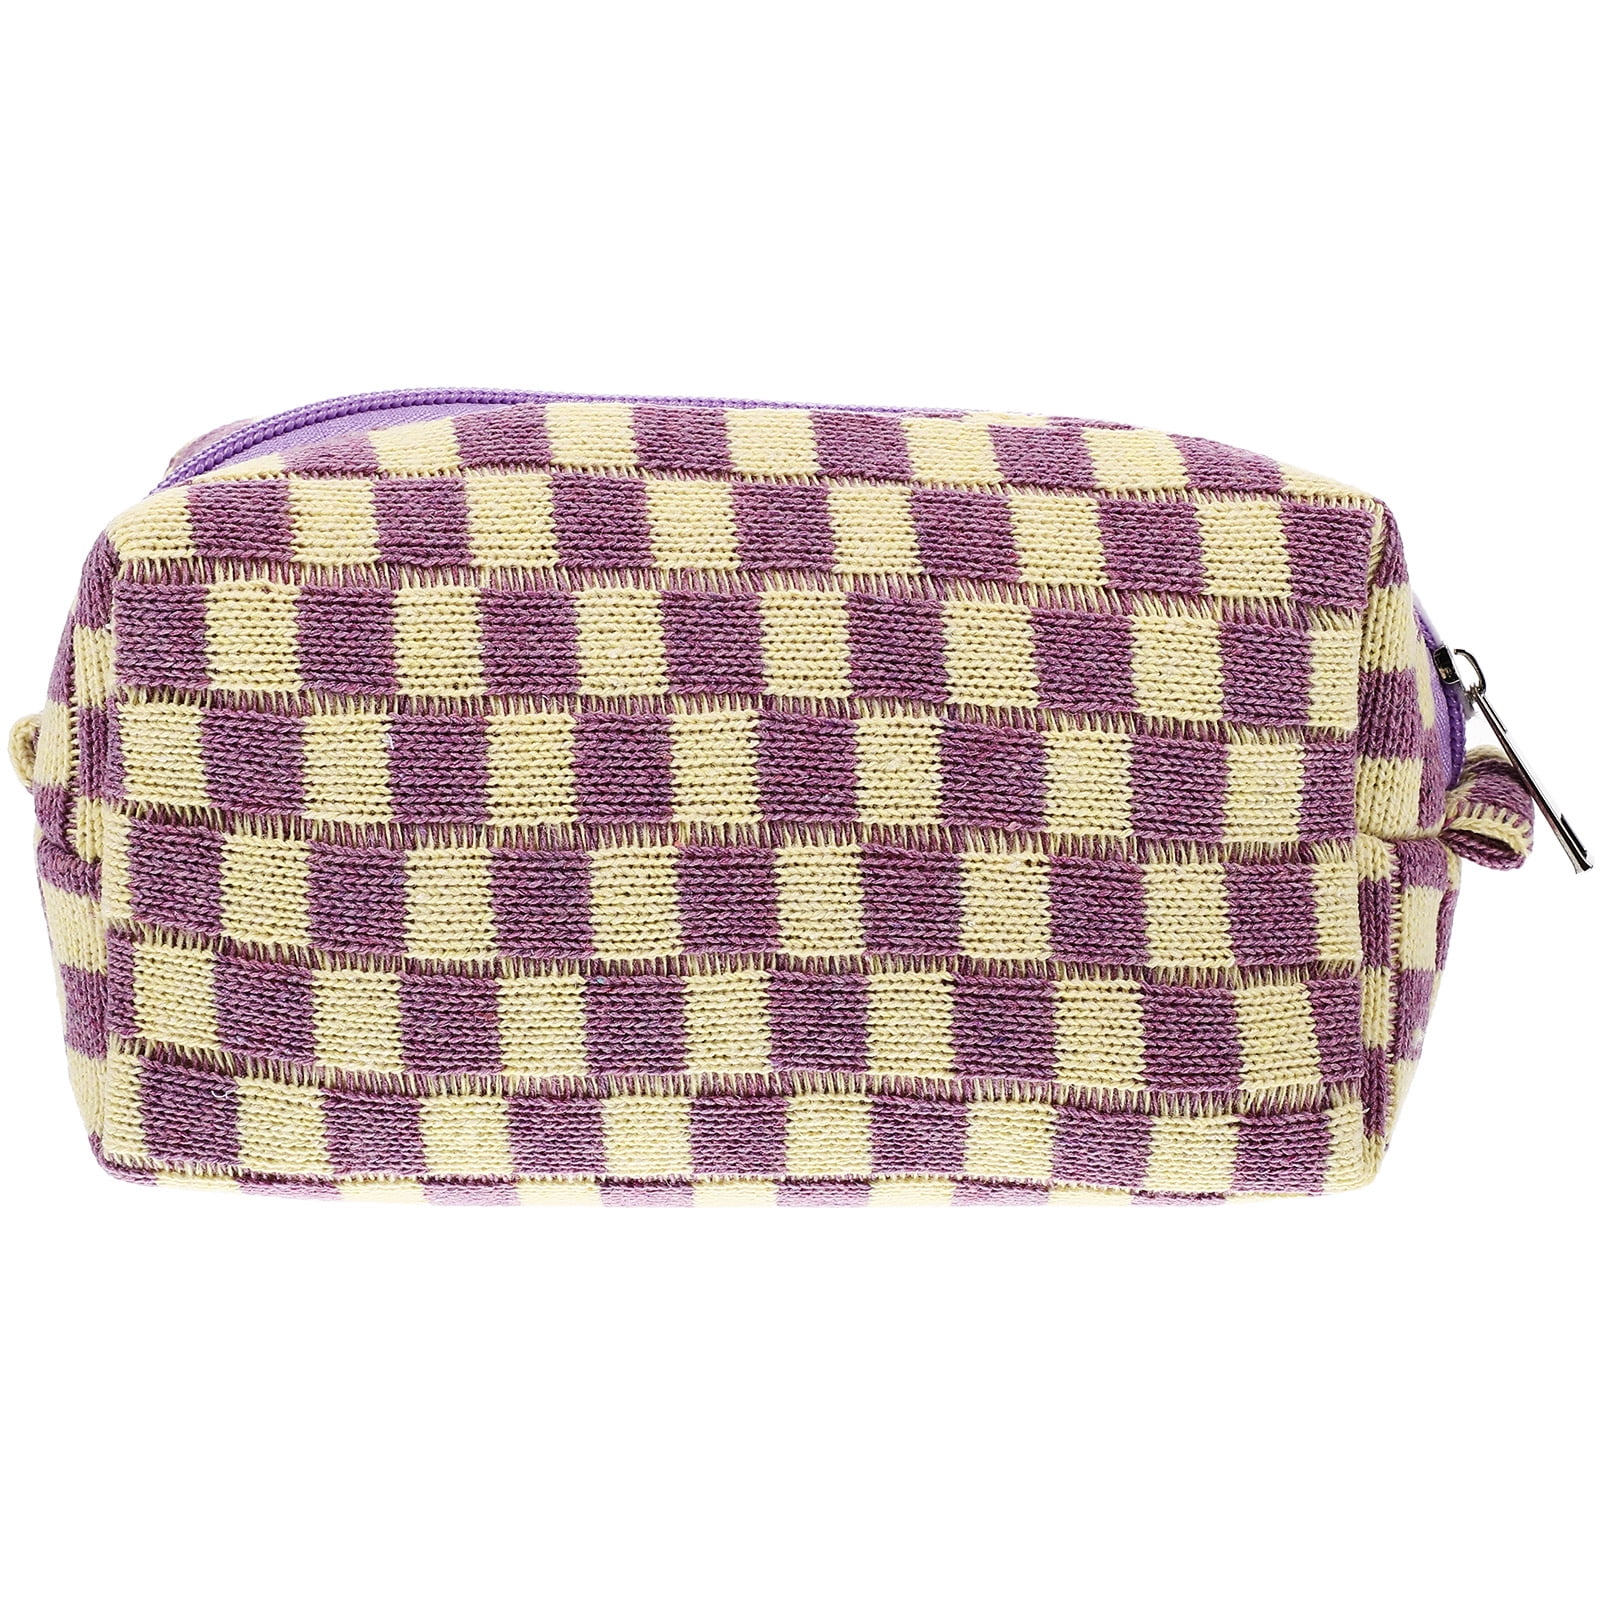 Woolen Yarn Makeup Bag Cosmetic Bag Large Capacity Checkered